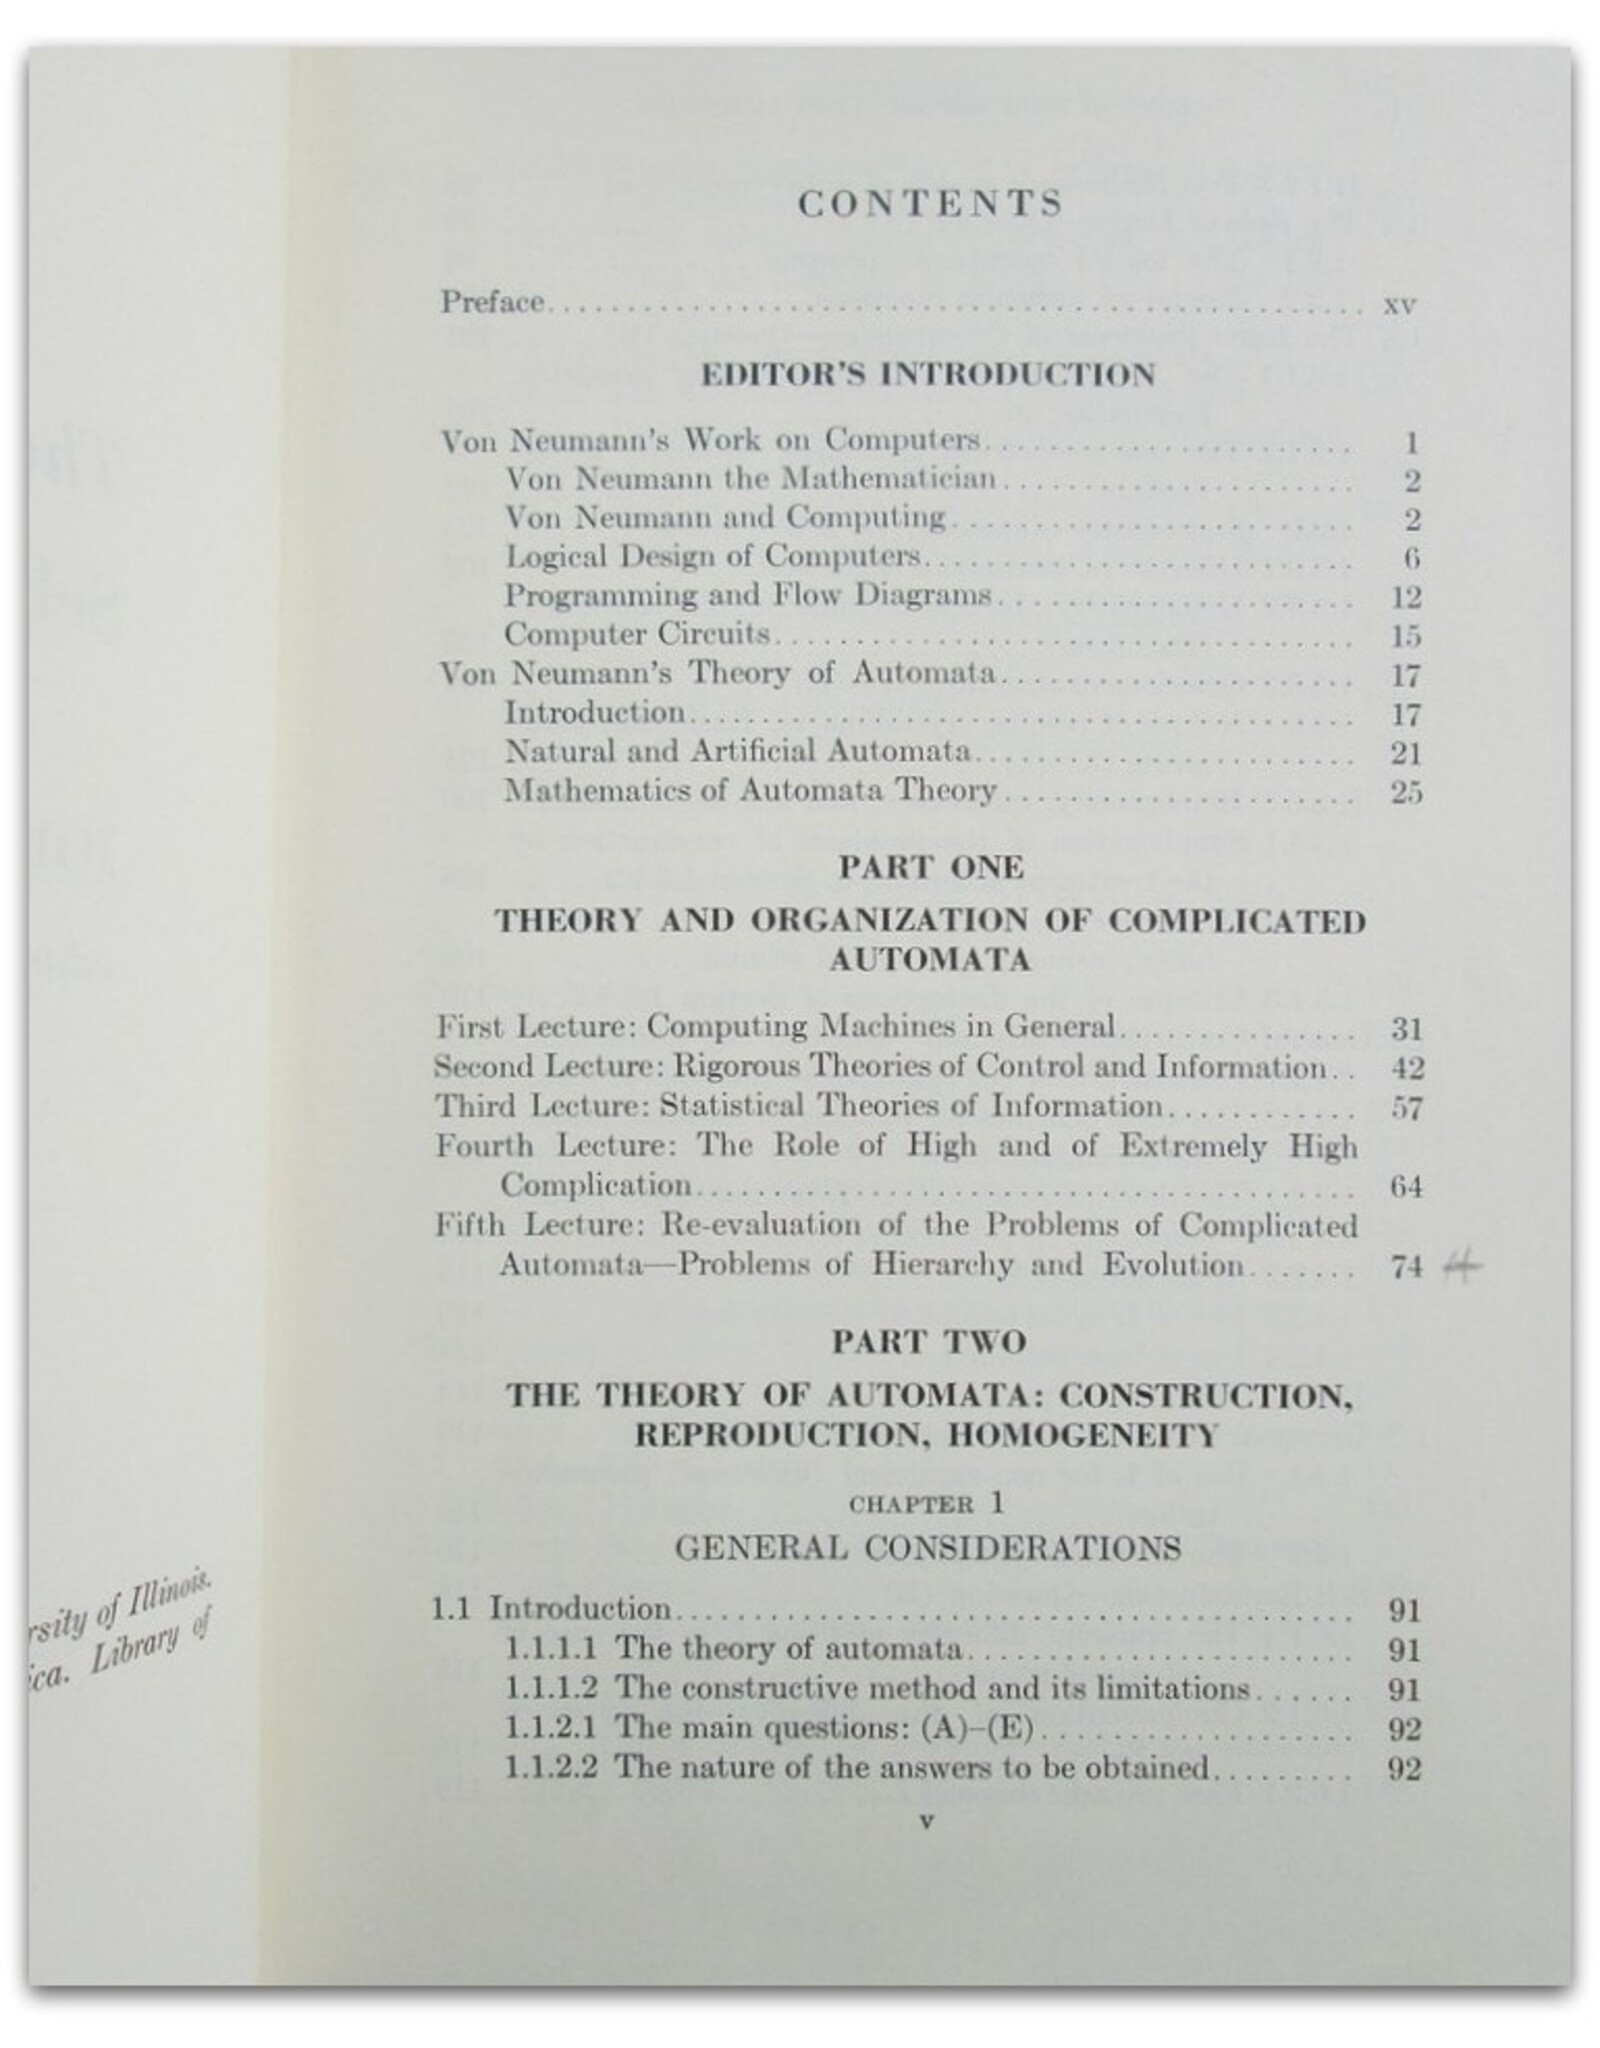 John von Neumann - Theory of Self-Reproducing Automata. Edited [...] by Arthur W. Burks